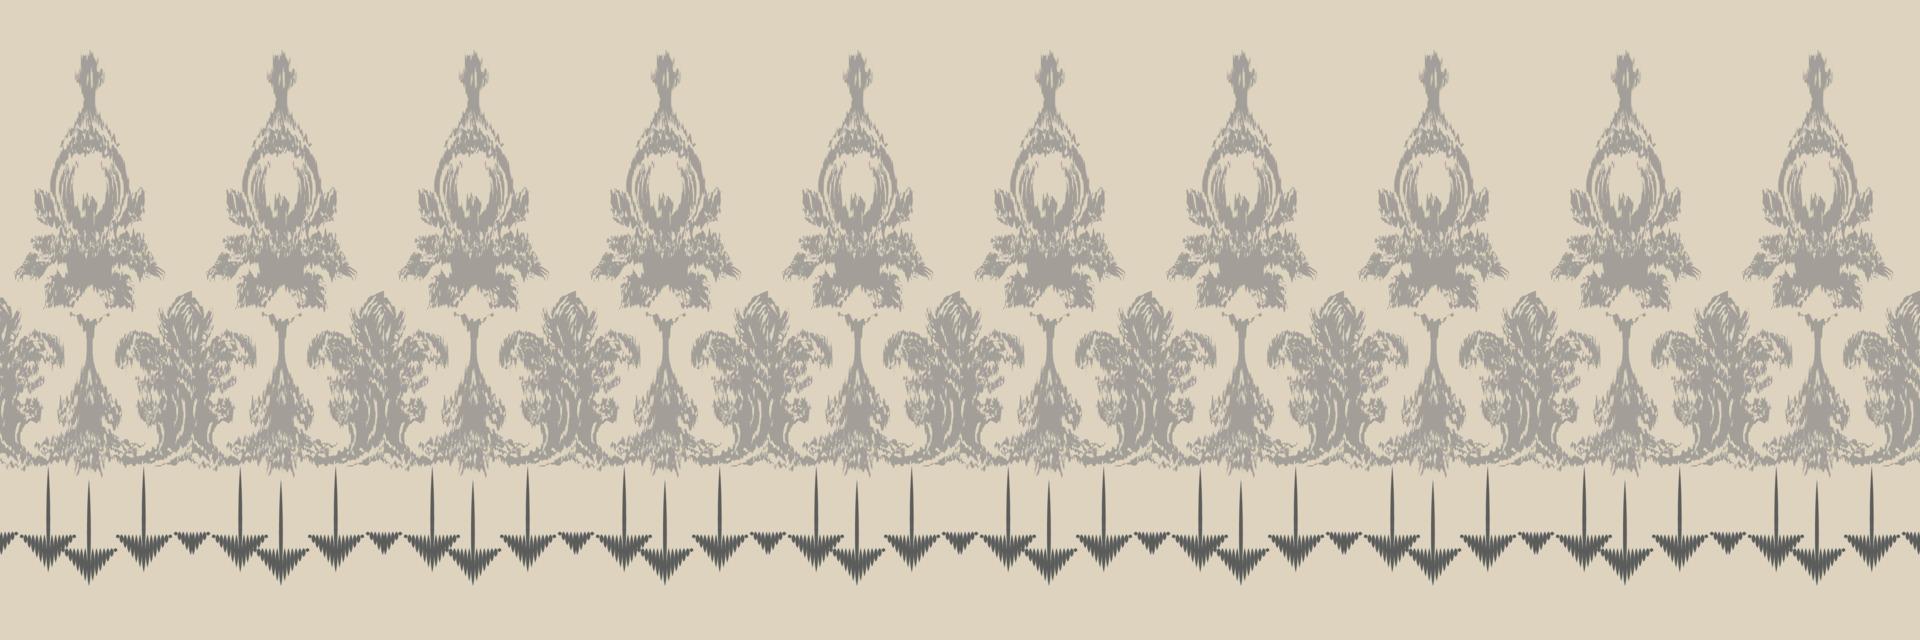 padrão sem emenda africano tribal de tecido ikat. étnico geométrico batik ikkat design têxtil de vetor digital para estampas tecido saree mughal pincel símbolo faixas textura kurti kurtis kurtas